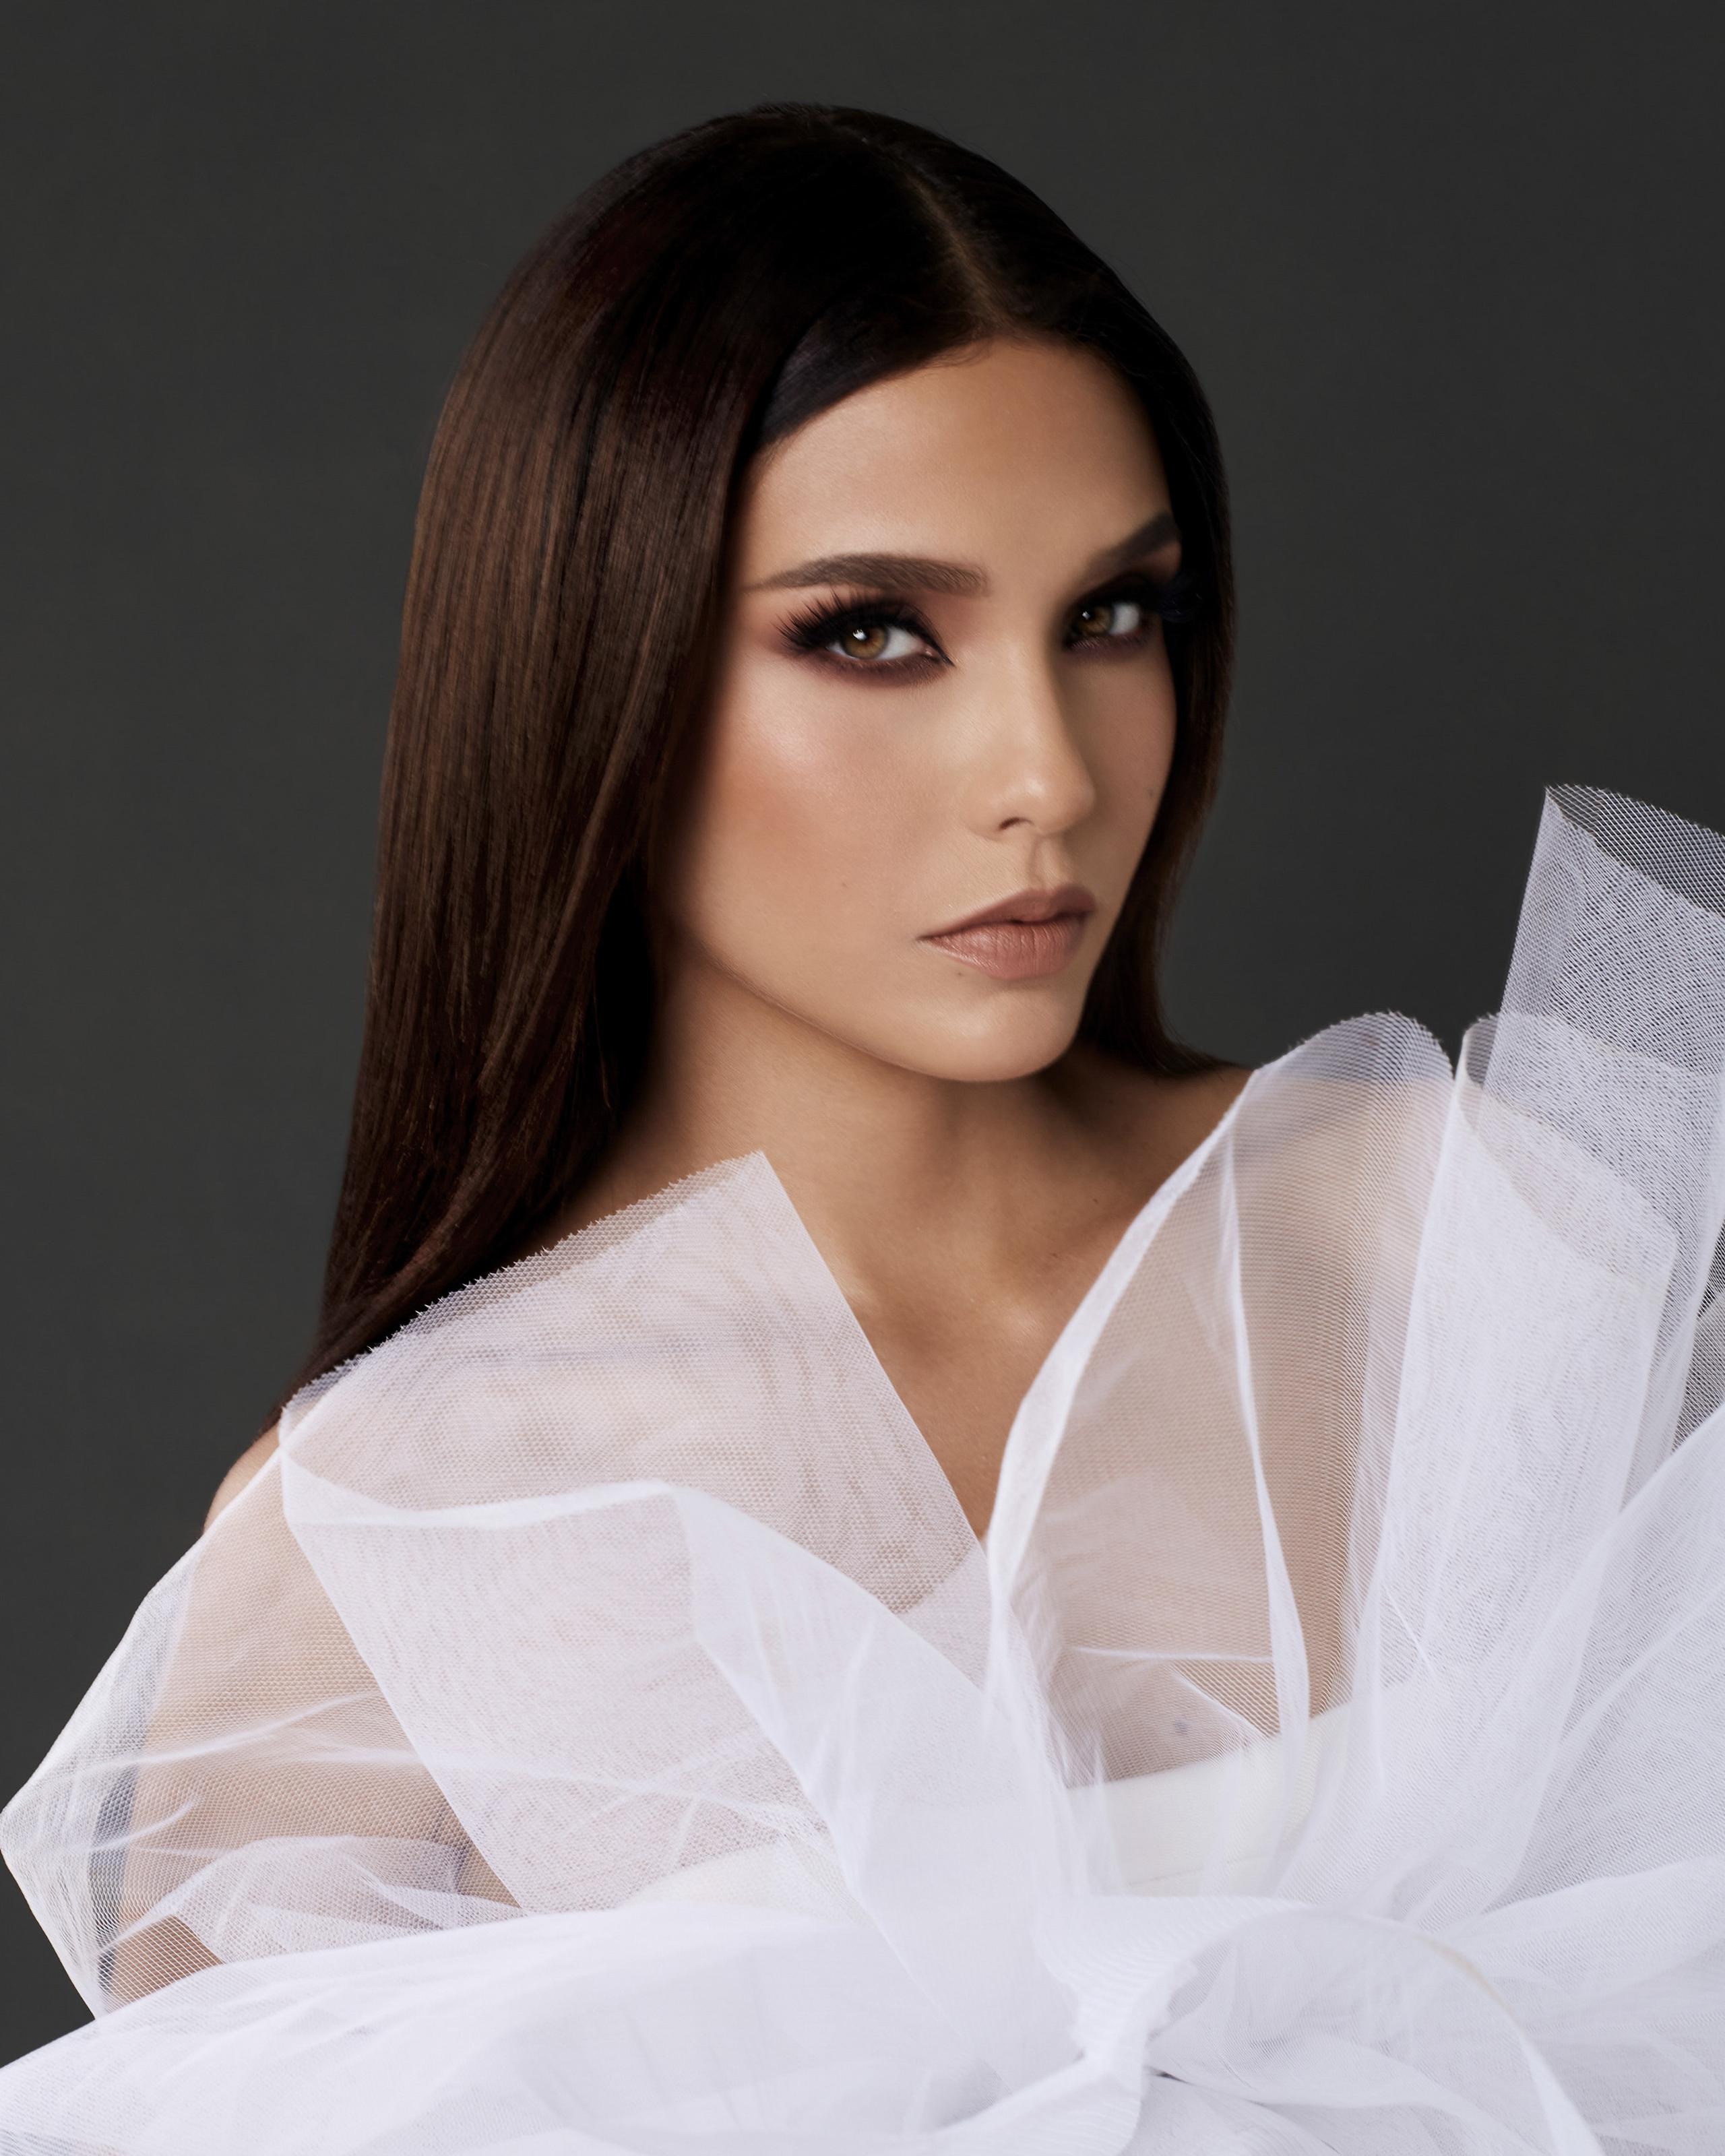 Miss Perú   
Janick Maceta Del Castillo
27 años de edad